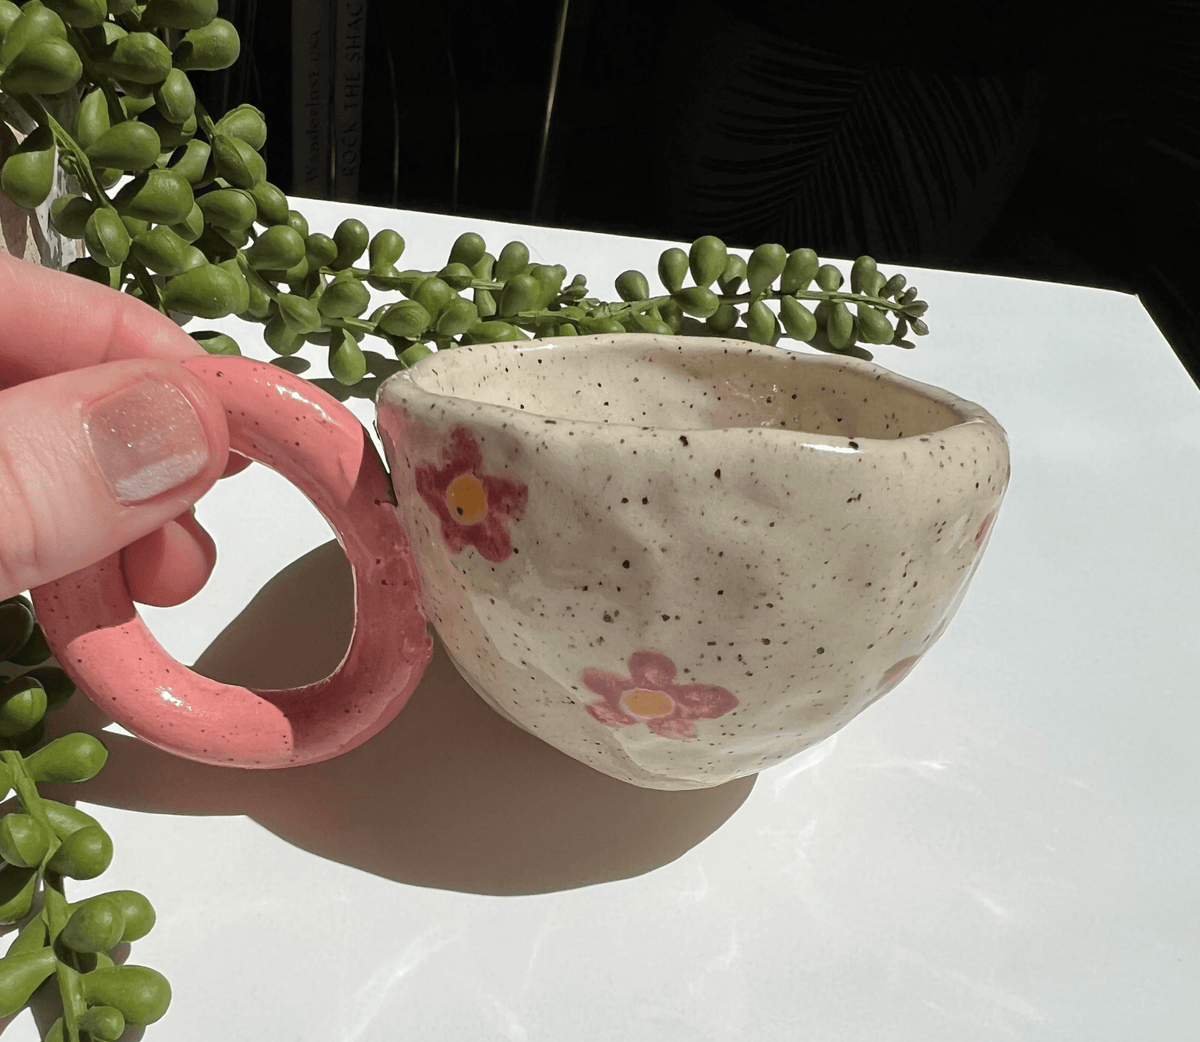 Coffee Tasting and Clay Mug Making Pottery Class — 9/10 (Boston)